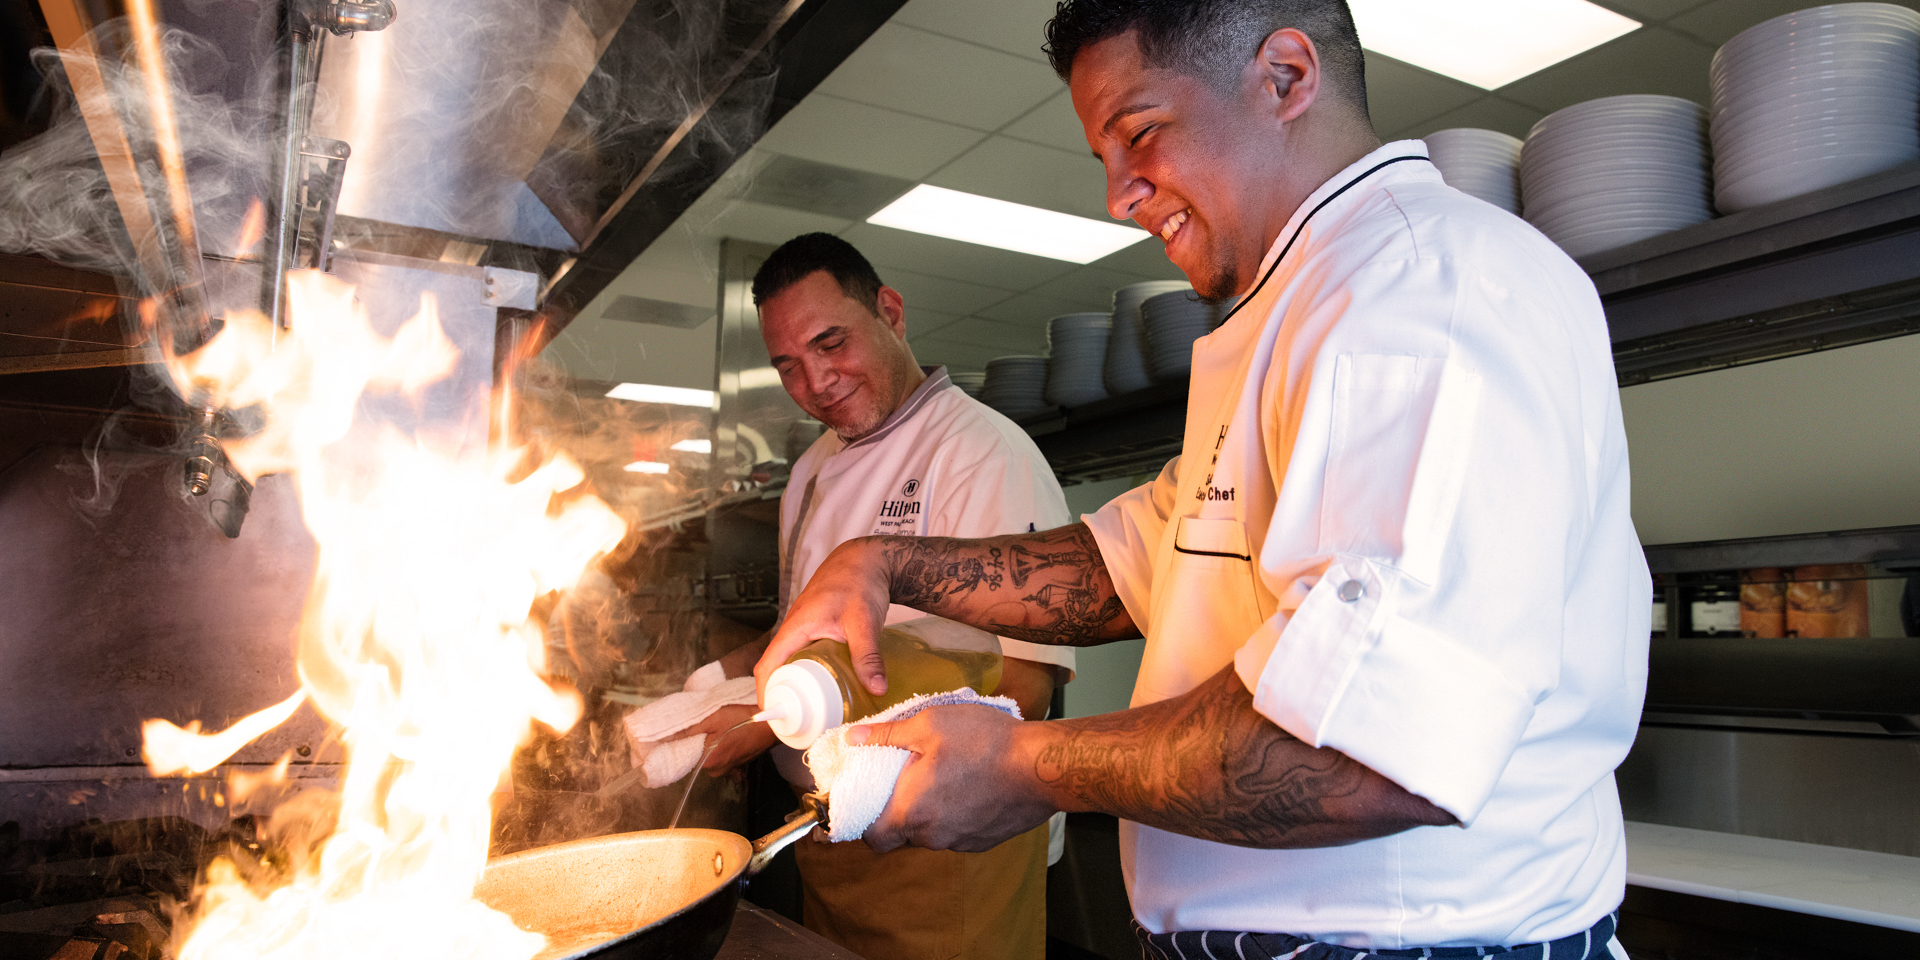 Hilton West Palm Beach Galley chefs